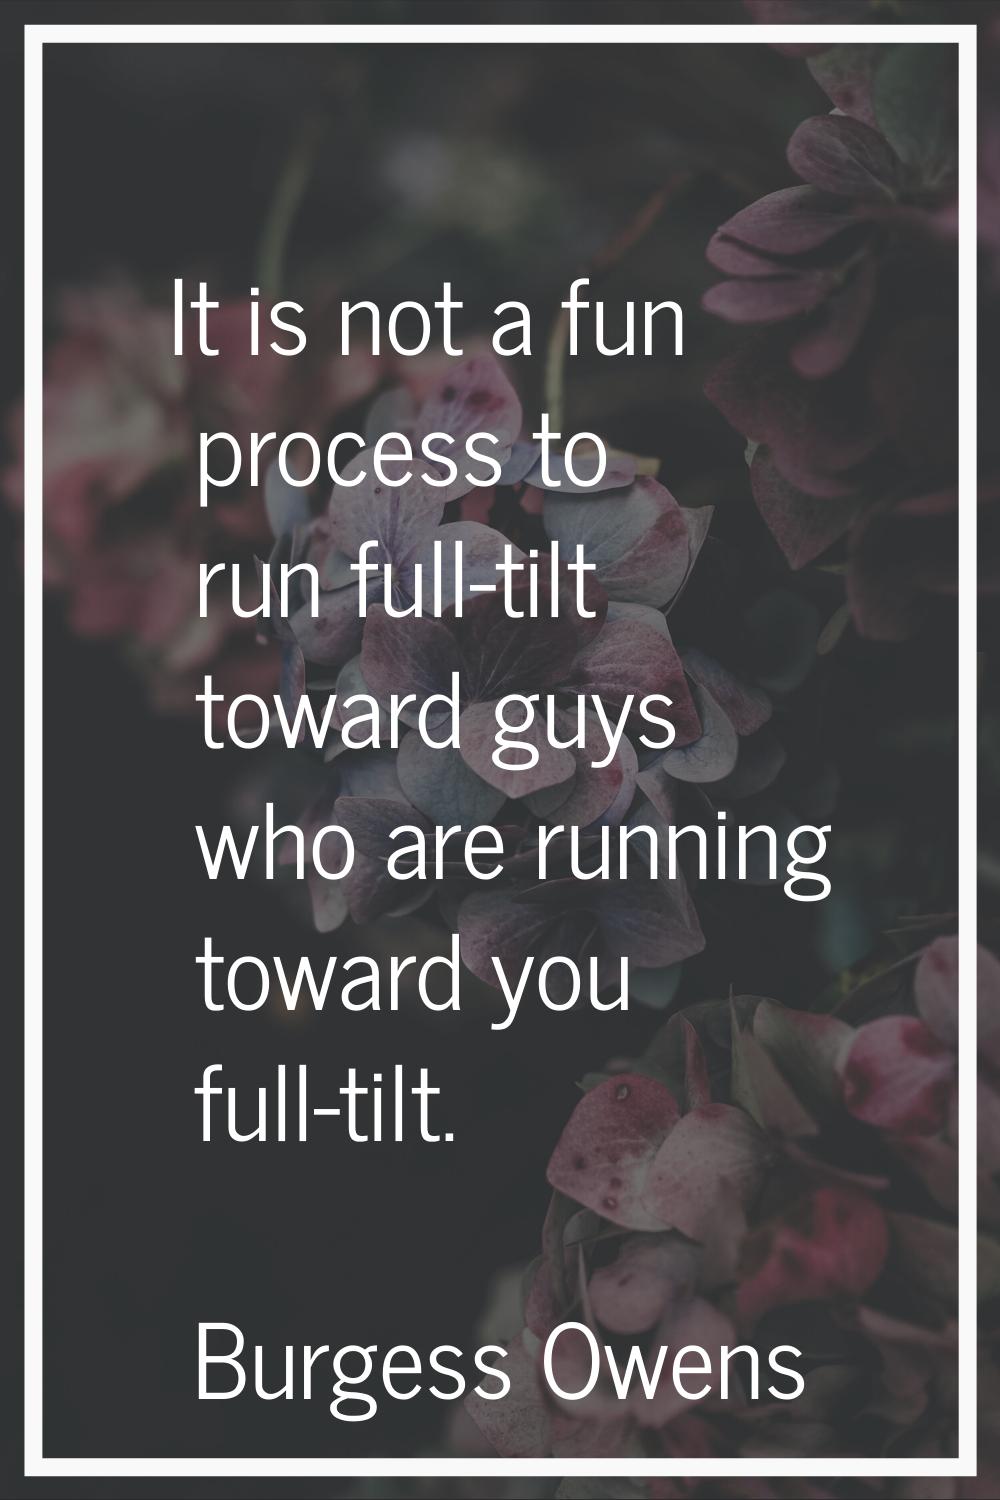 It is not a fun process to run full-tilt toward guys who are running toward you full-tilt.